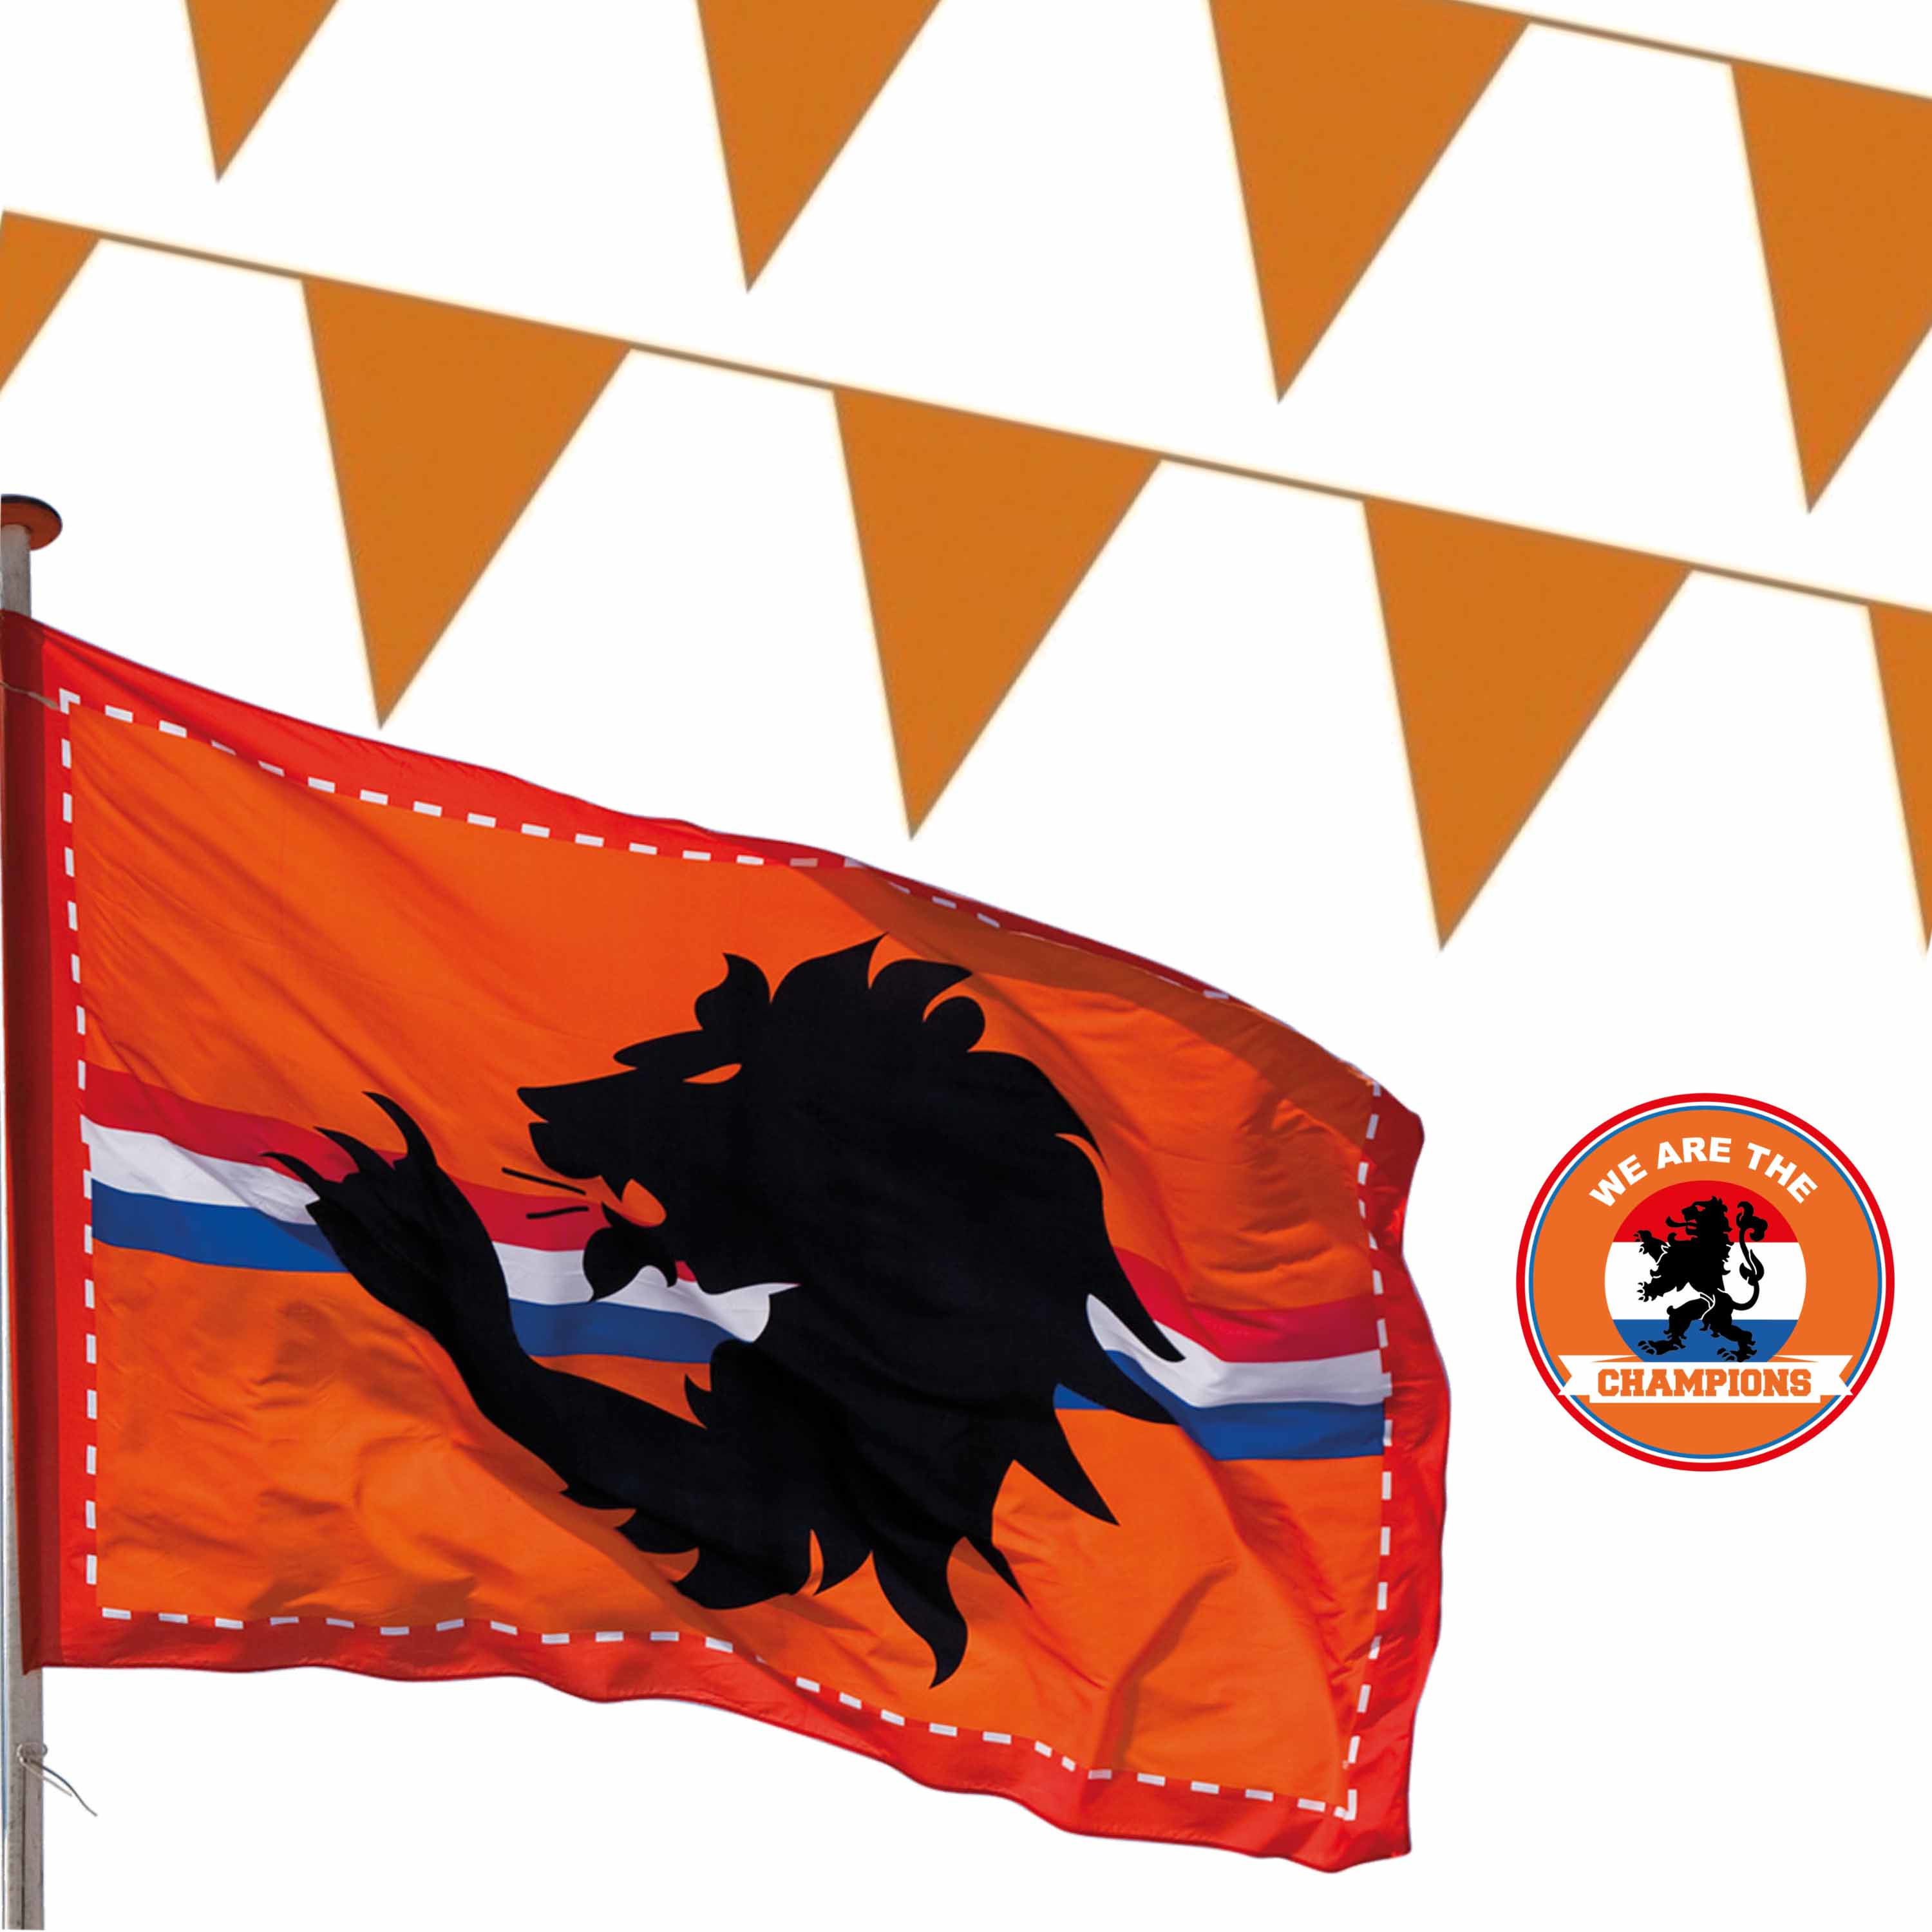 Ek oranje straat- huis versiering pakket met oa 2x Mega Holland vlag, 200 meter oranje vlaggenlijnen